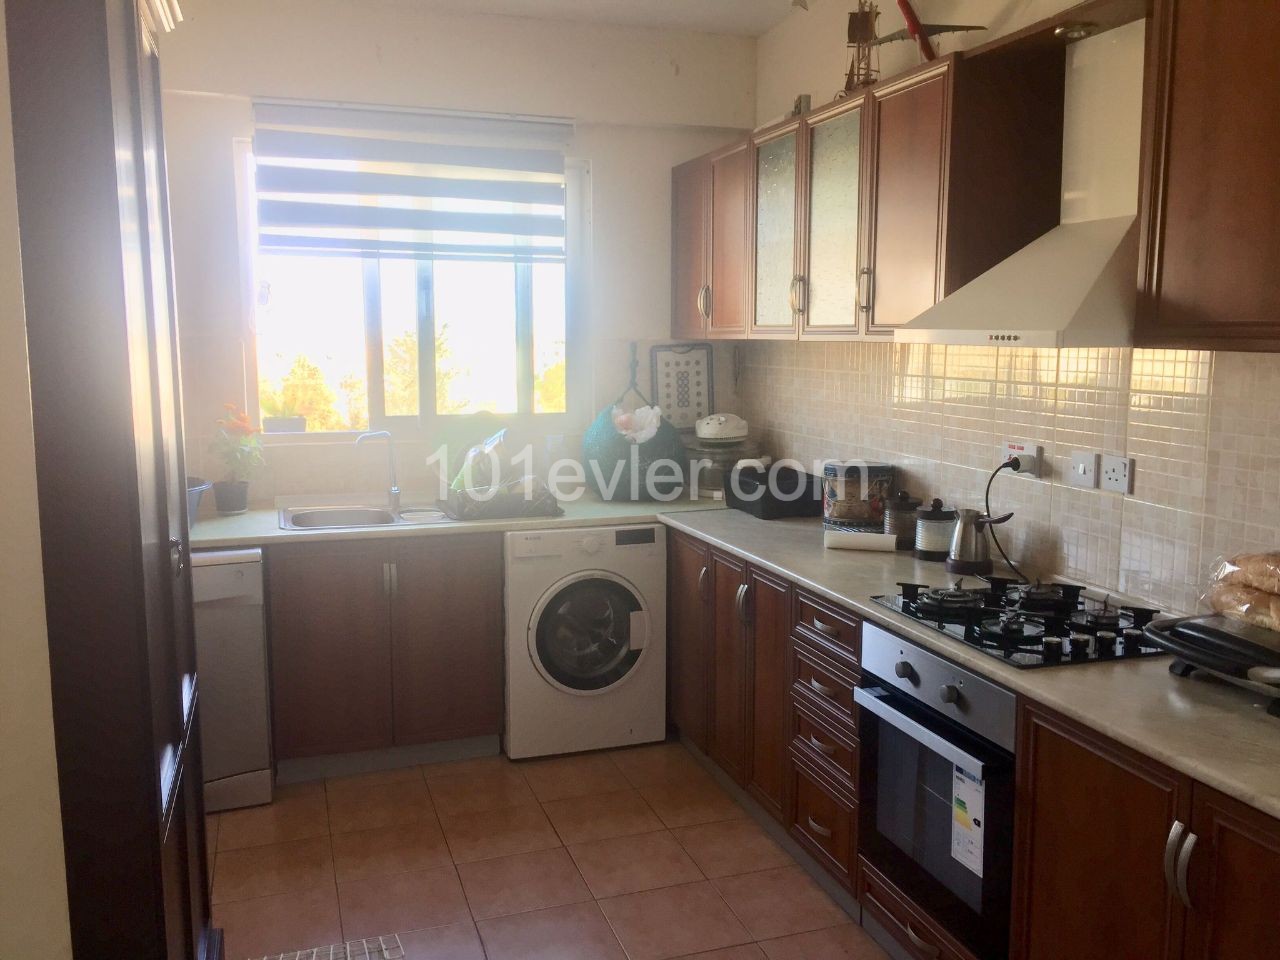 2+ 1 80 M2 Apartment for Sale in Kyrenia Bosphorus 43,000 STG ** 